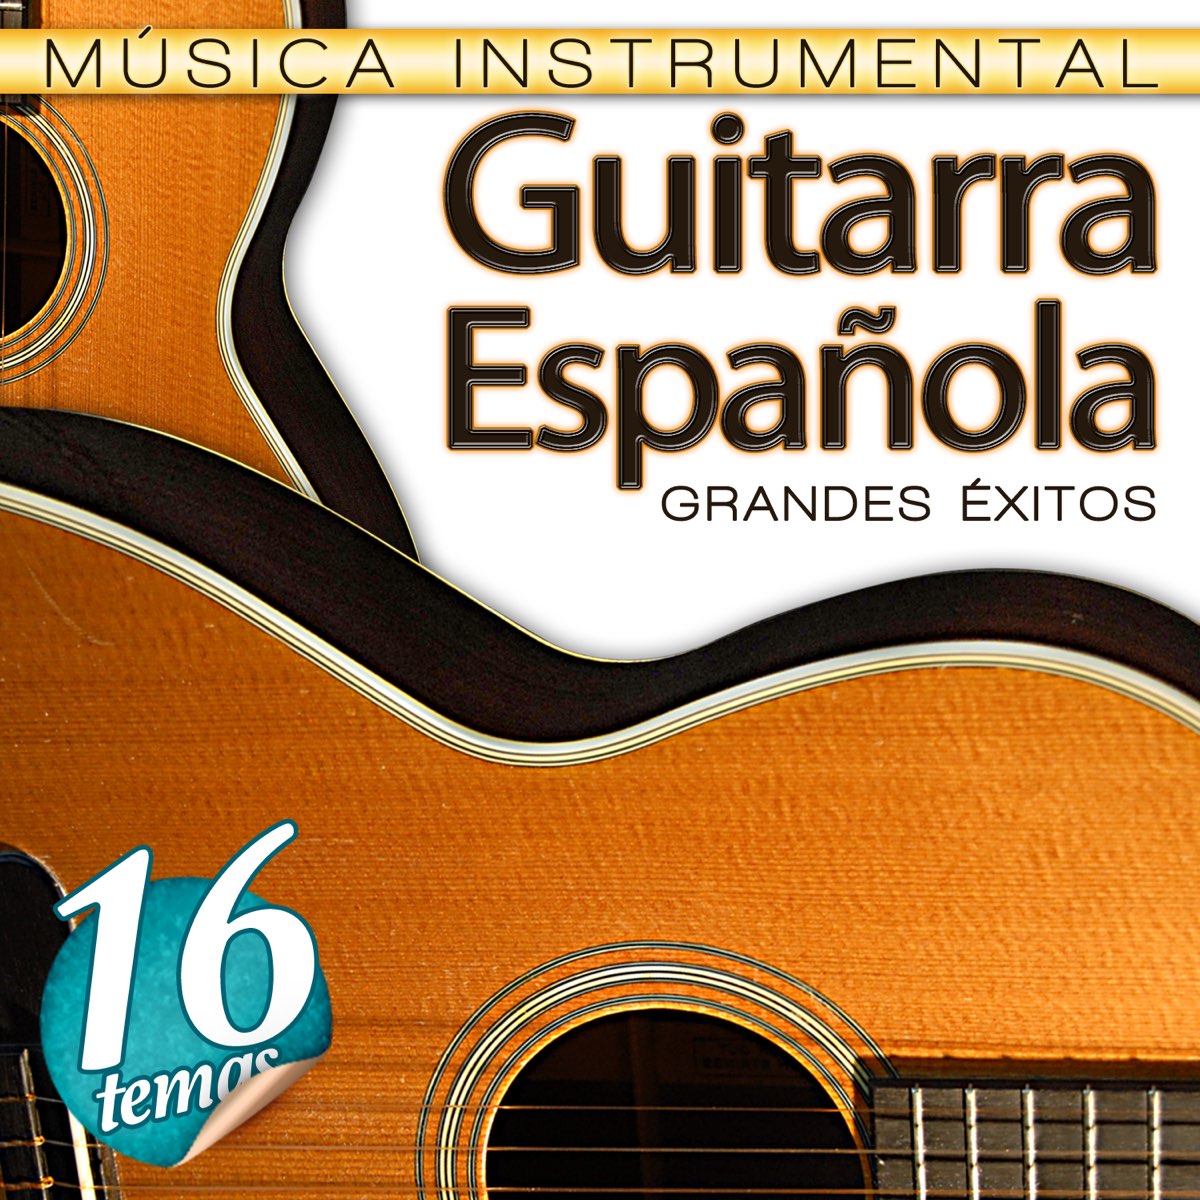 Música Instrumental: 16 Temas Guitarra Española Grandes Éxitos by Gipsy  Flamenco Band on Apple Music